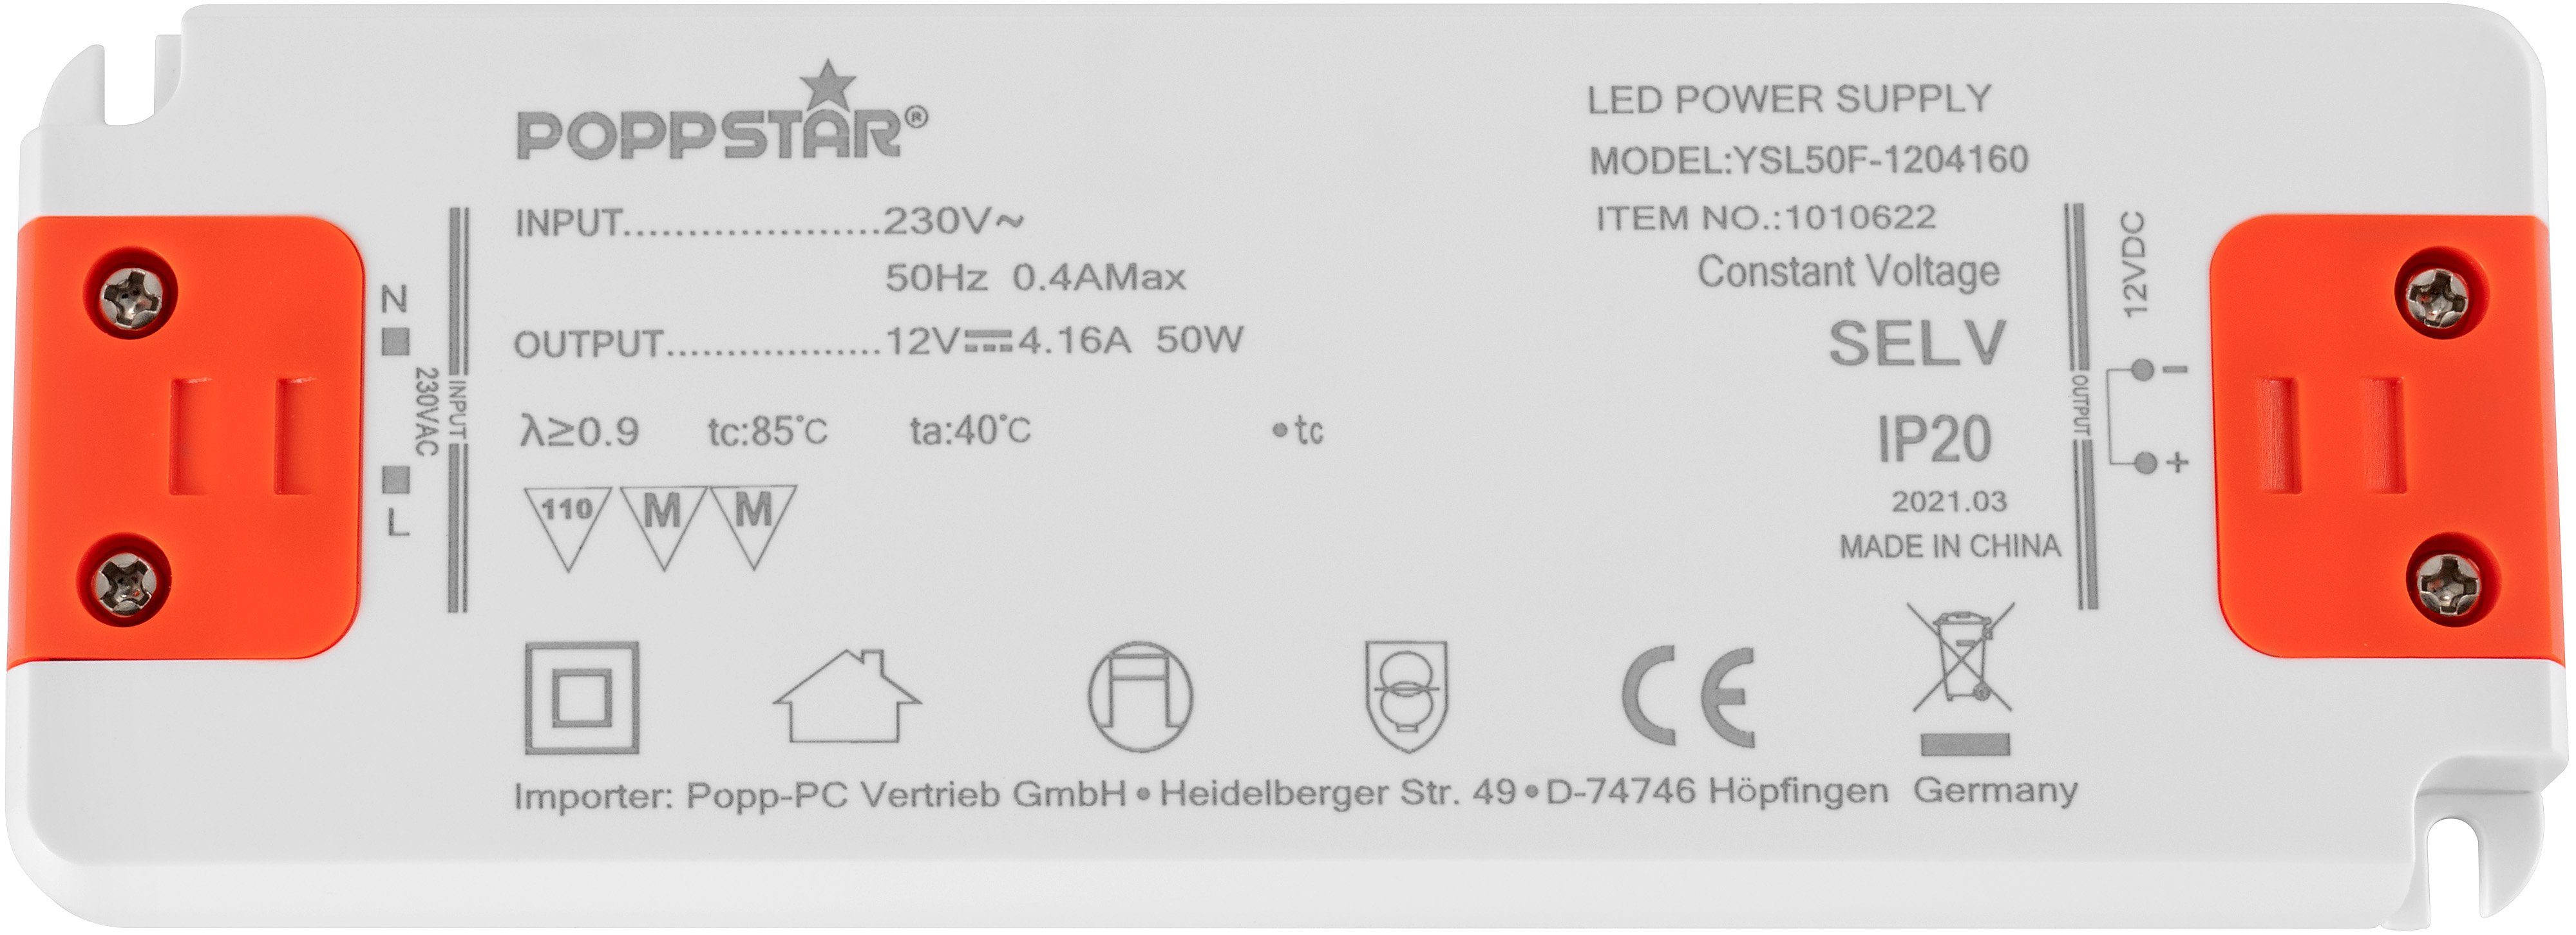 / LED (LED 50 Trafo Supply Power flach Slim LEDs) Watt ultra 0,5 4,16A V AC bis Poppstar 12V 12 230V LED-Transformator (für DC